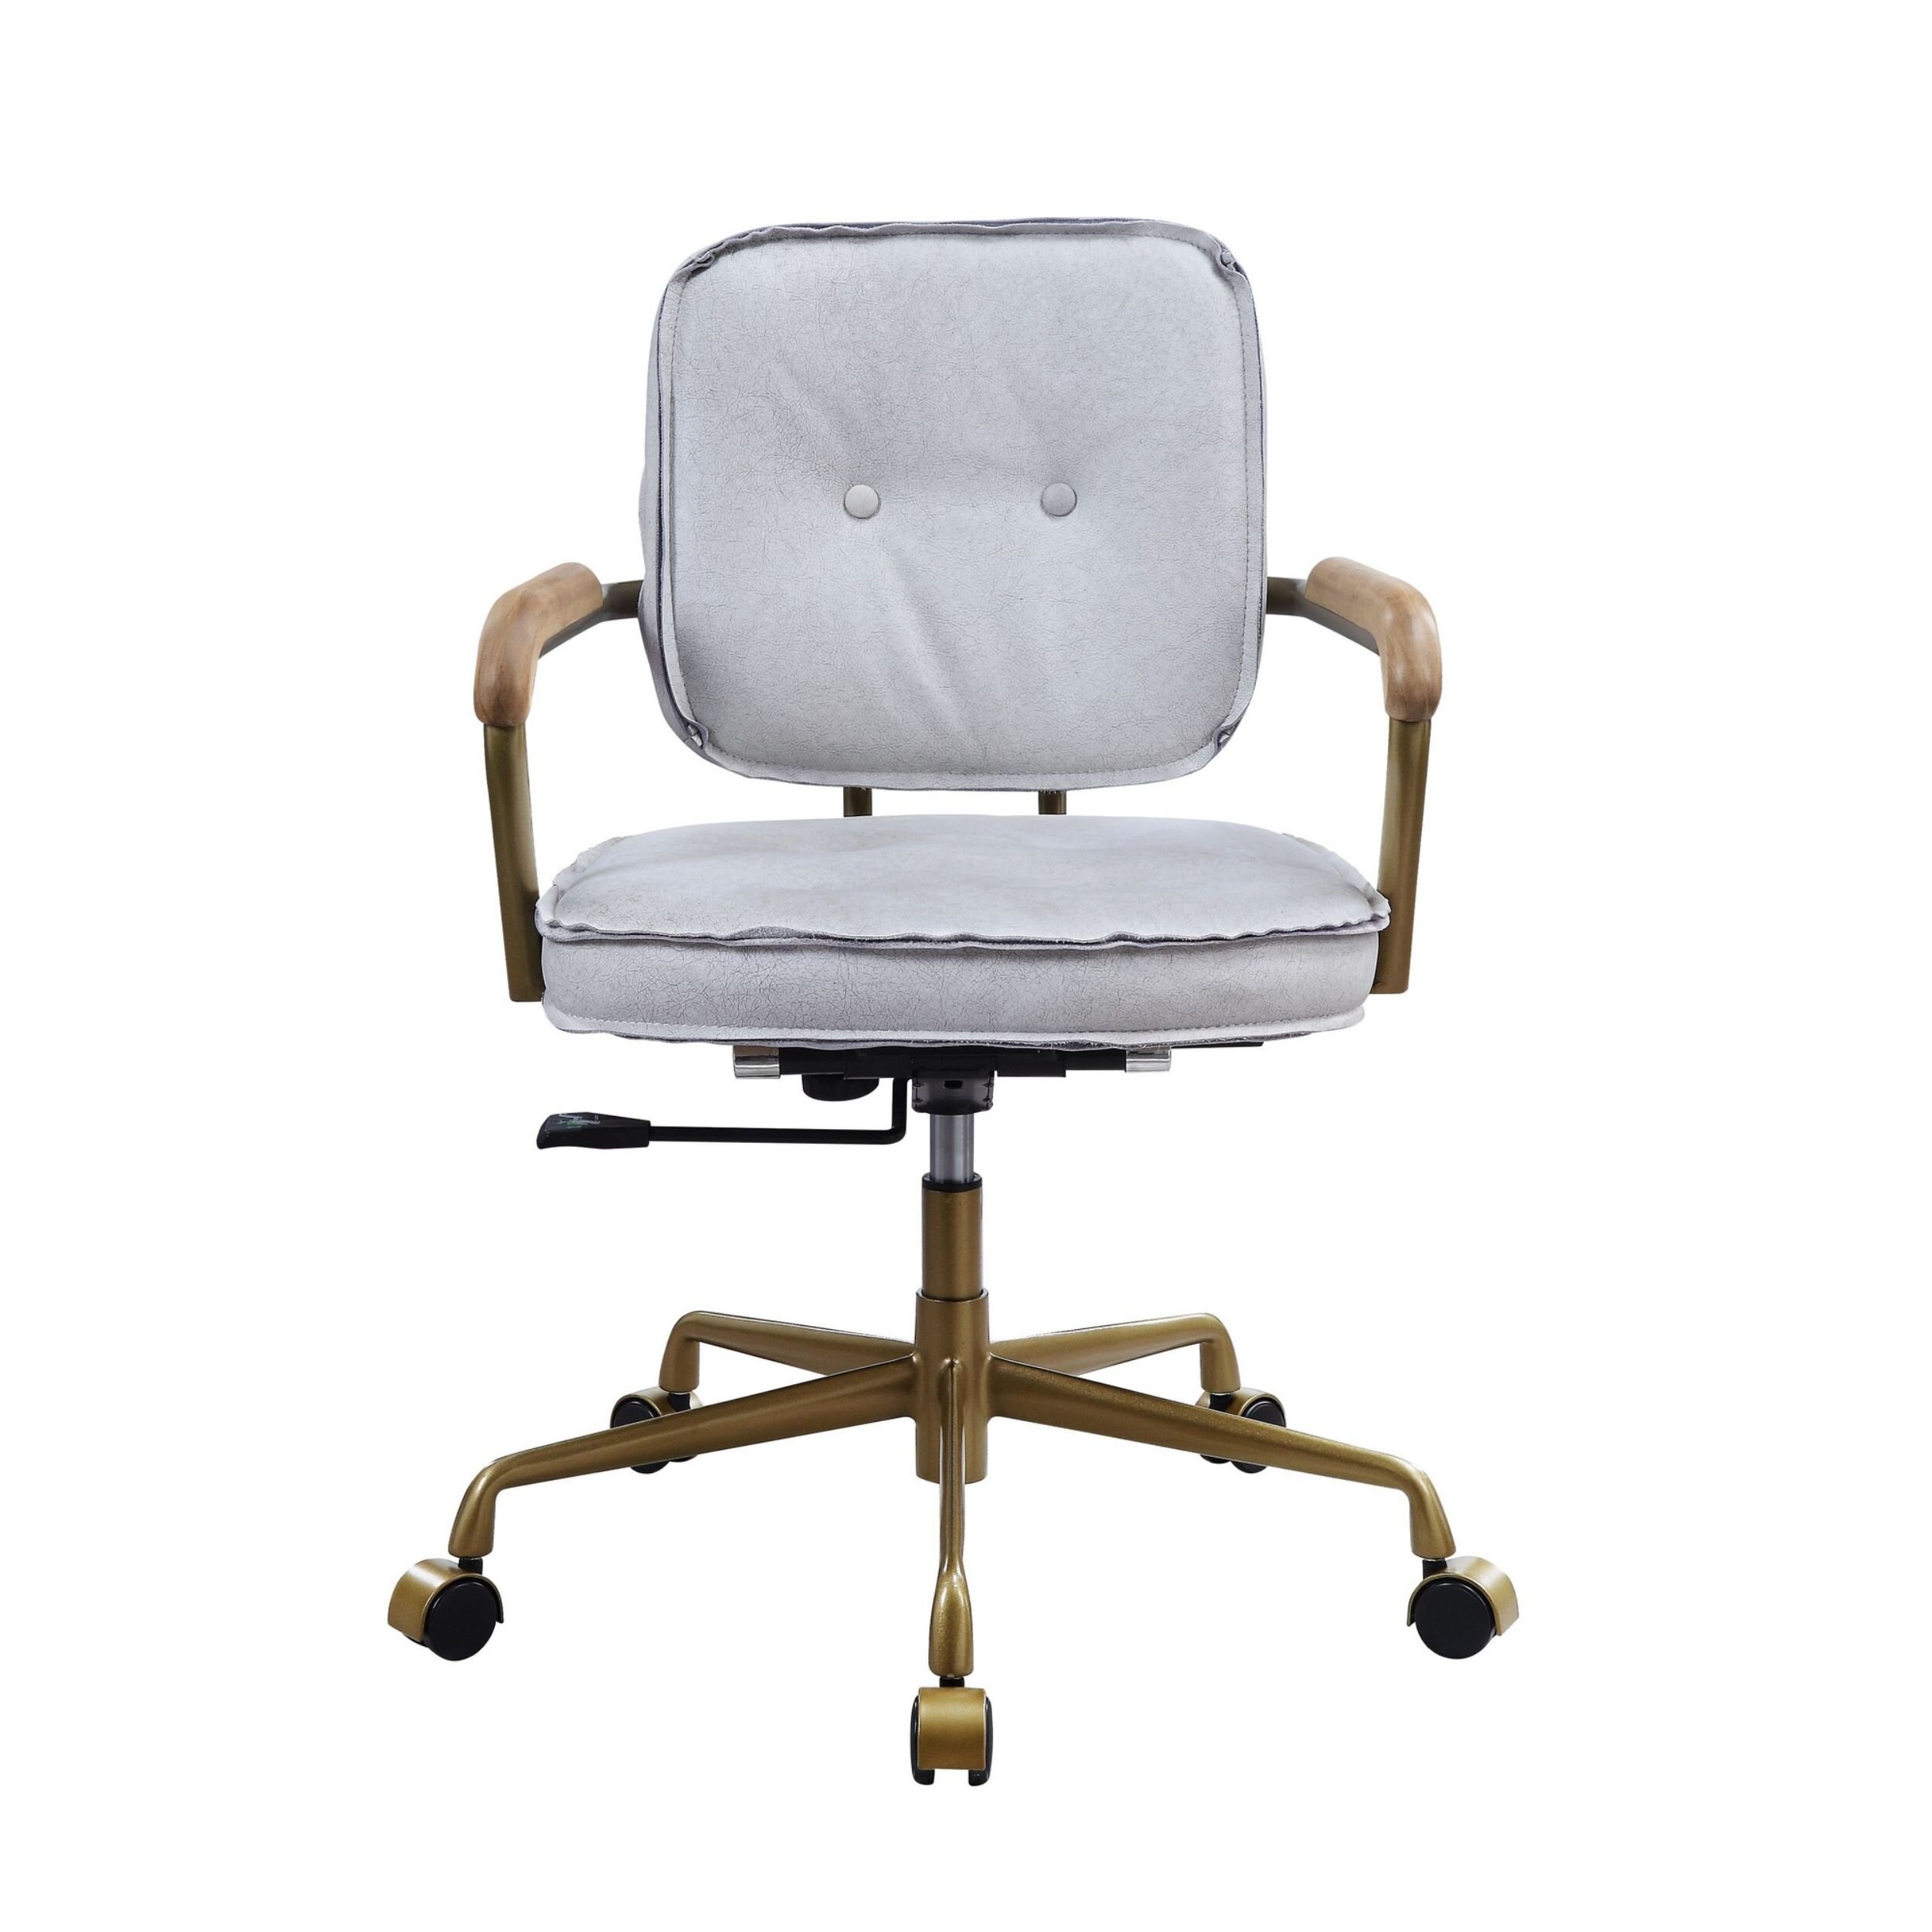 Flash Furniture Black Contoured Office Chair Cushion - Certi-PUR